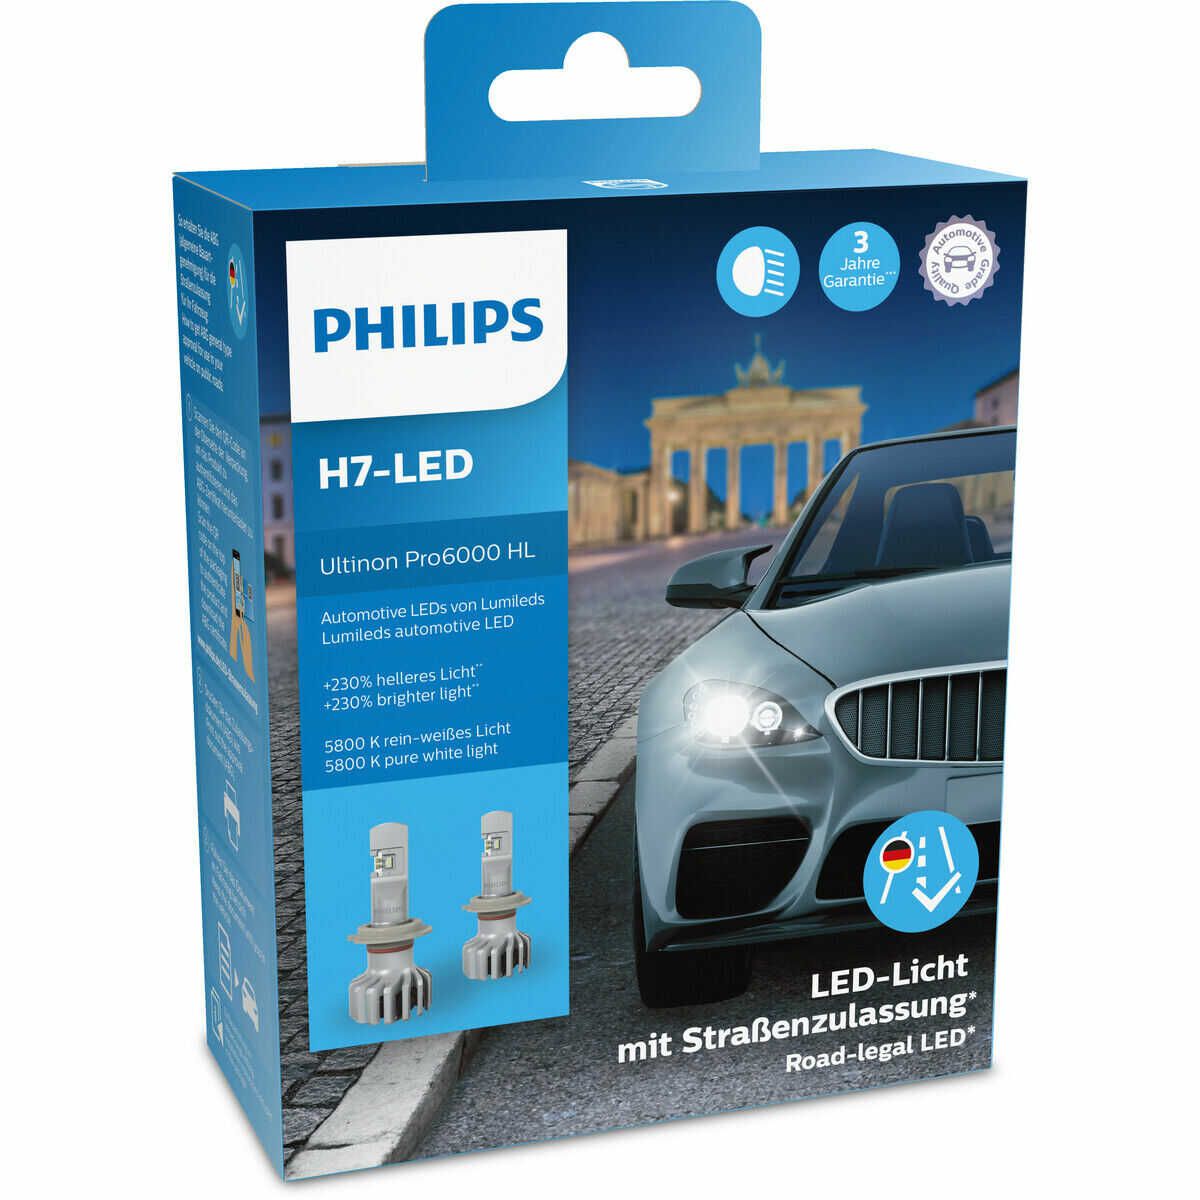 2 x PHILIPS H7 LED Autolampe Ultinon Pro6000 11972 Glühlampen für 79,99€ statt 88,05€